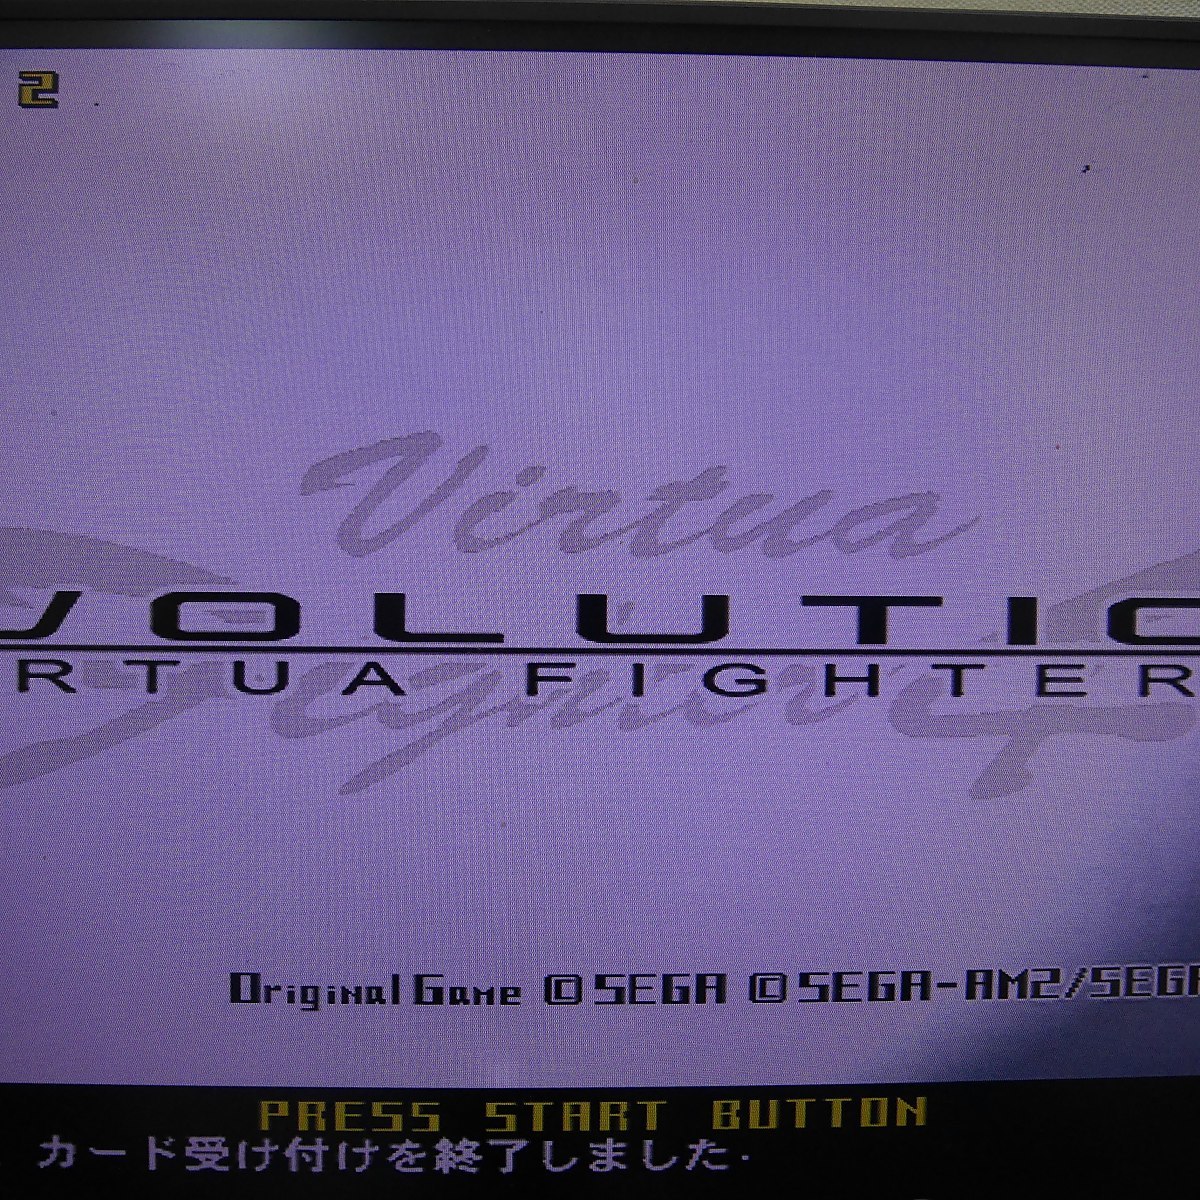 SEGA NAOMI2 Virtua fighter 4 Evo dragon shon(GDS-0024A) GD-ROM disk only operation verification ending 